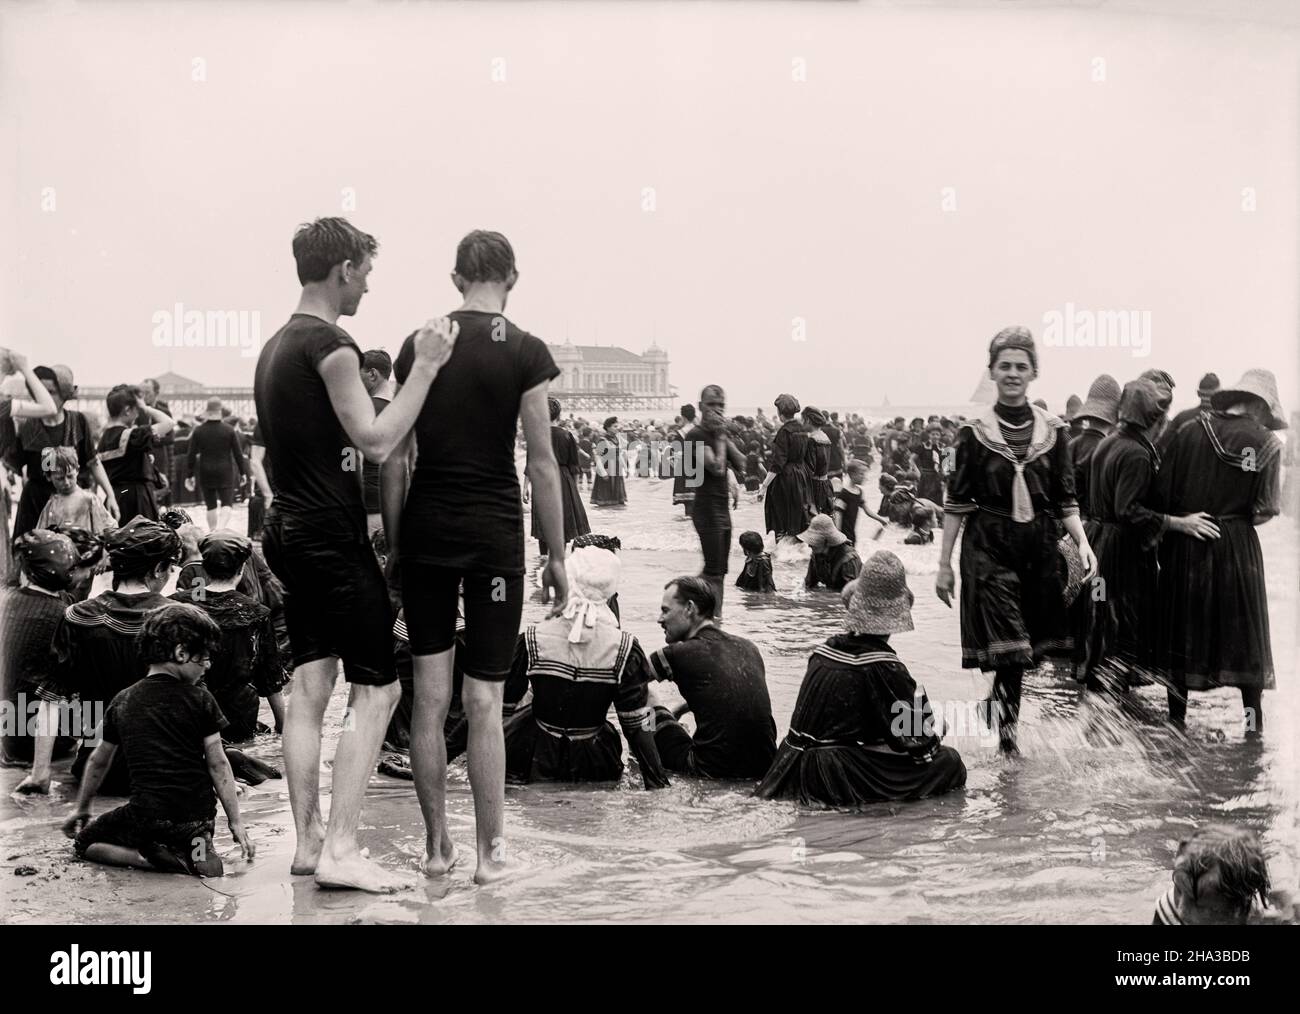 Crowdewd Beach - Atalntic City - 1900s - Menschen am Strand Stockfoto